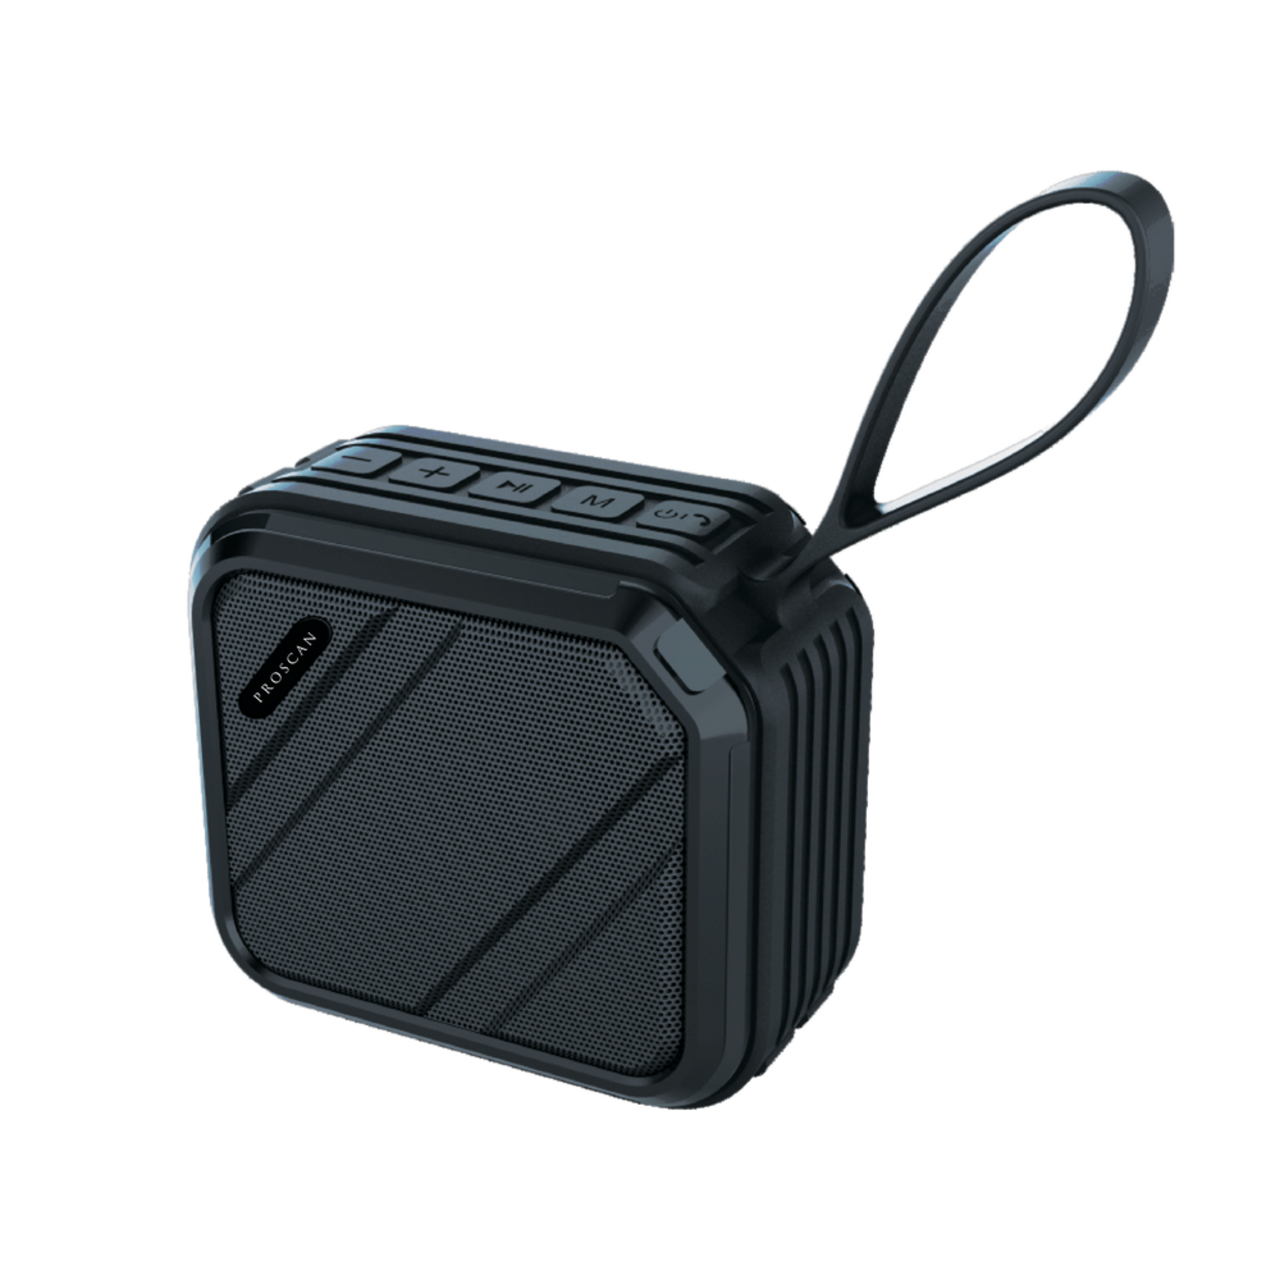 Haut-parleur portatif sans fil Bluetooth hydrofuge Proscan Extreme